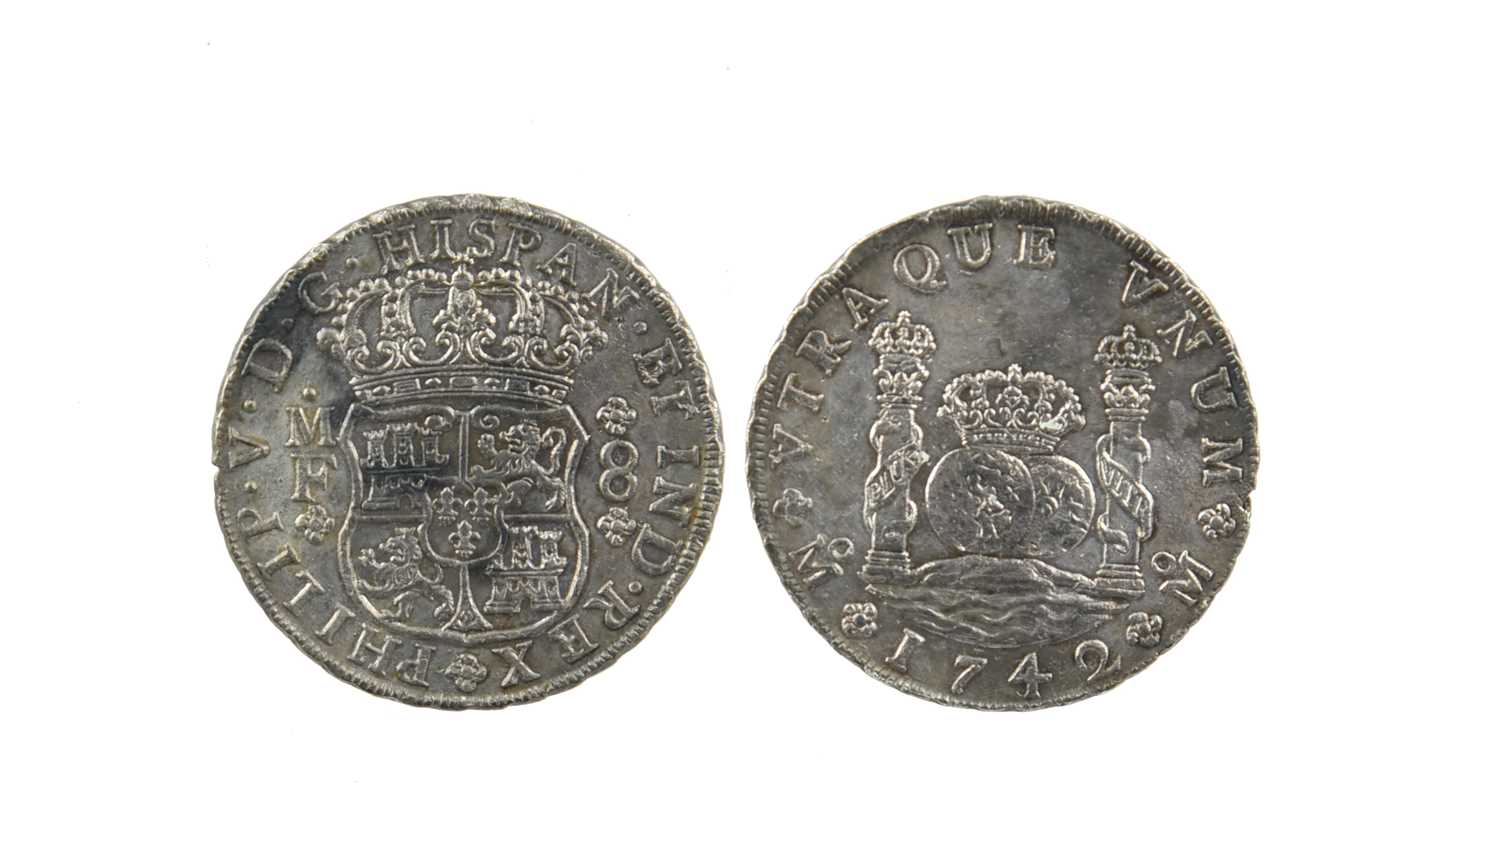 Mexico: Philip V, silver eight reales, 1742 MF, Mexico City, 42 over 32 (KM 103), good very fine.